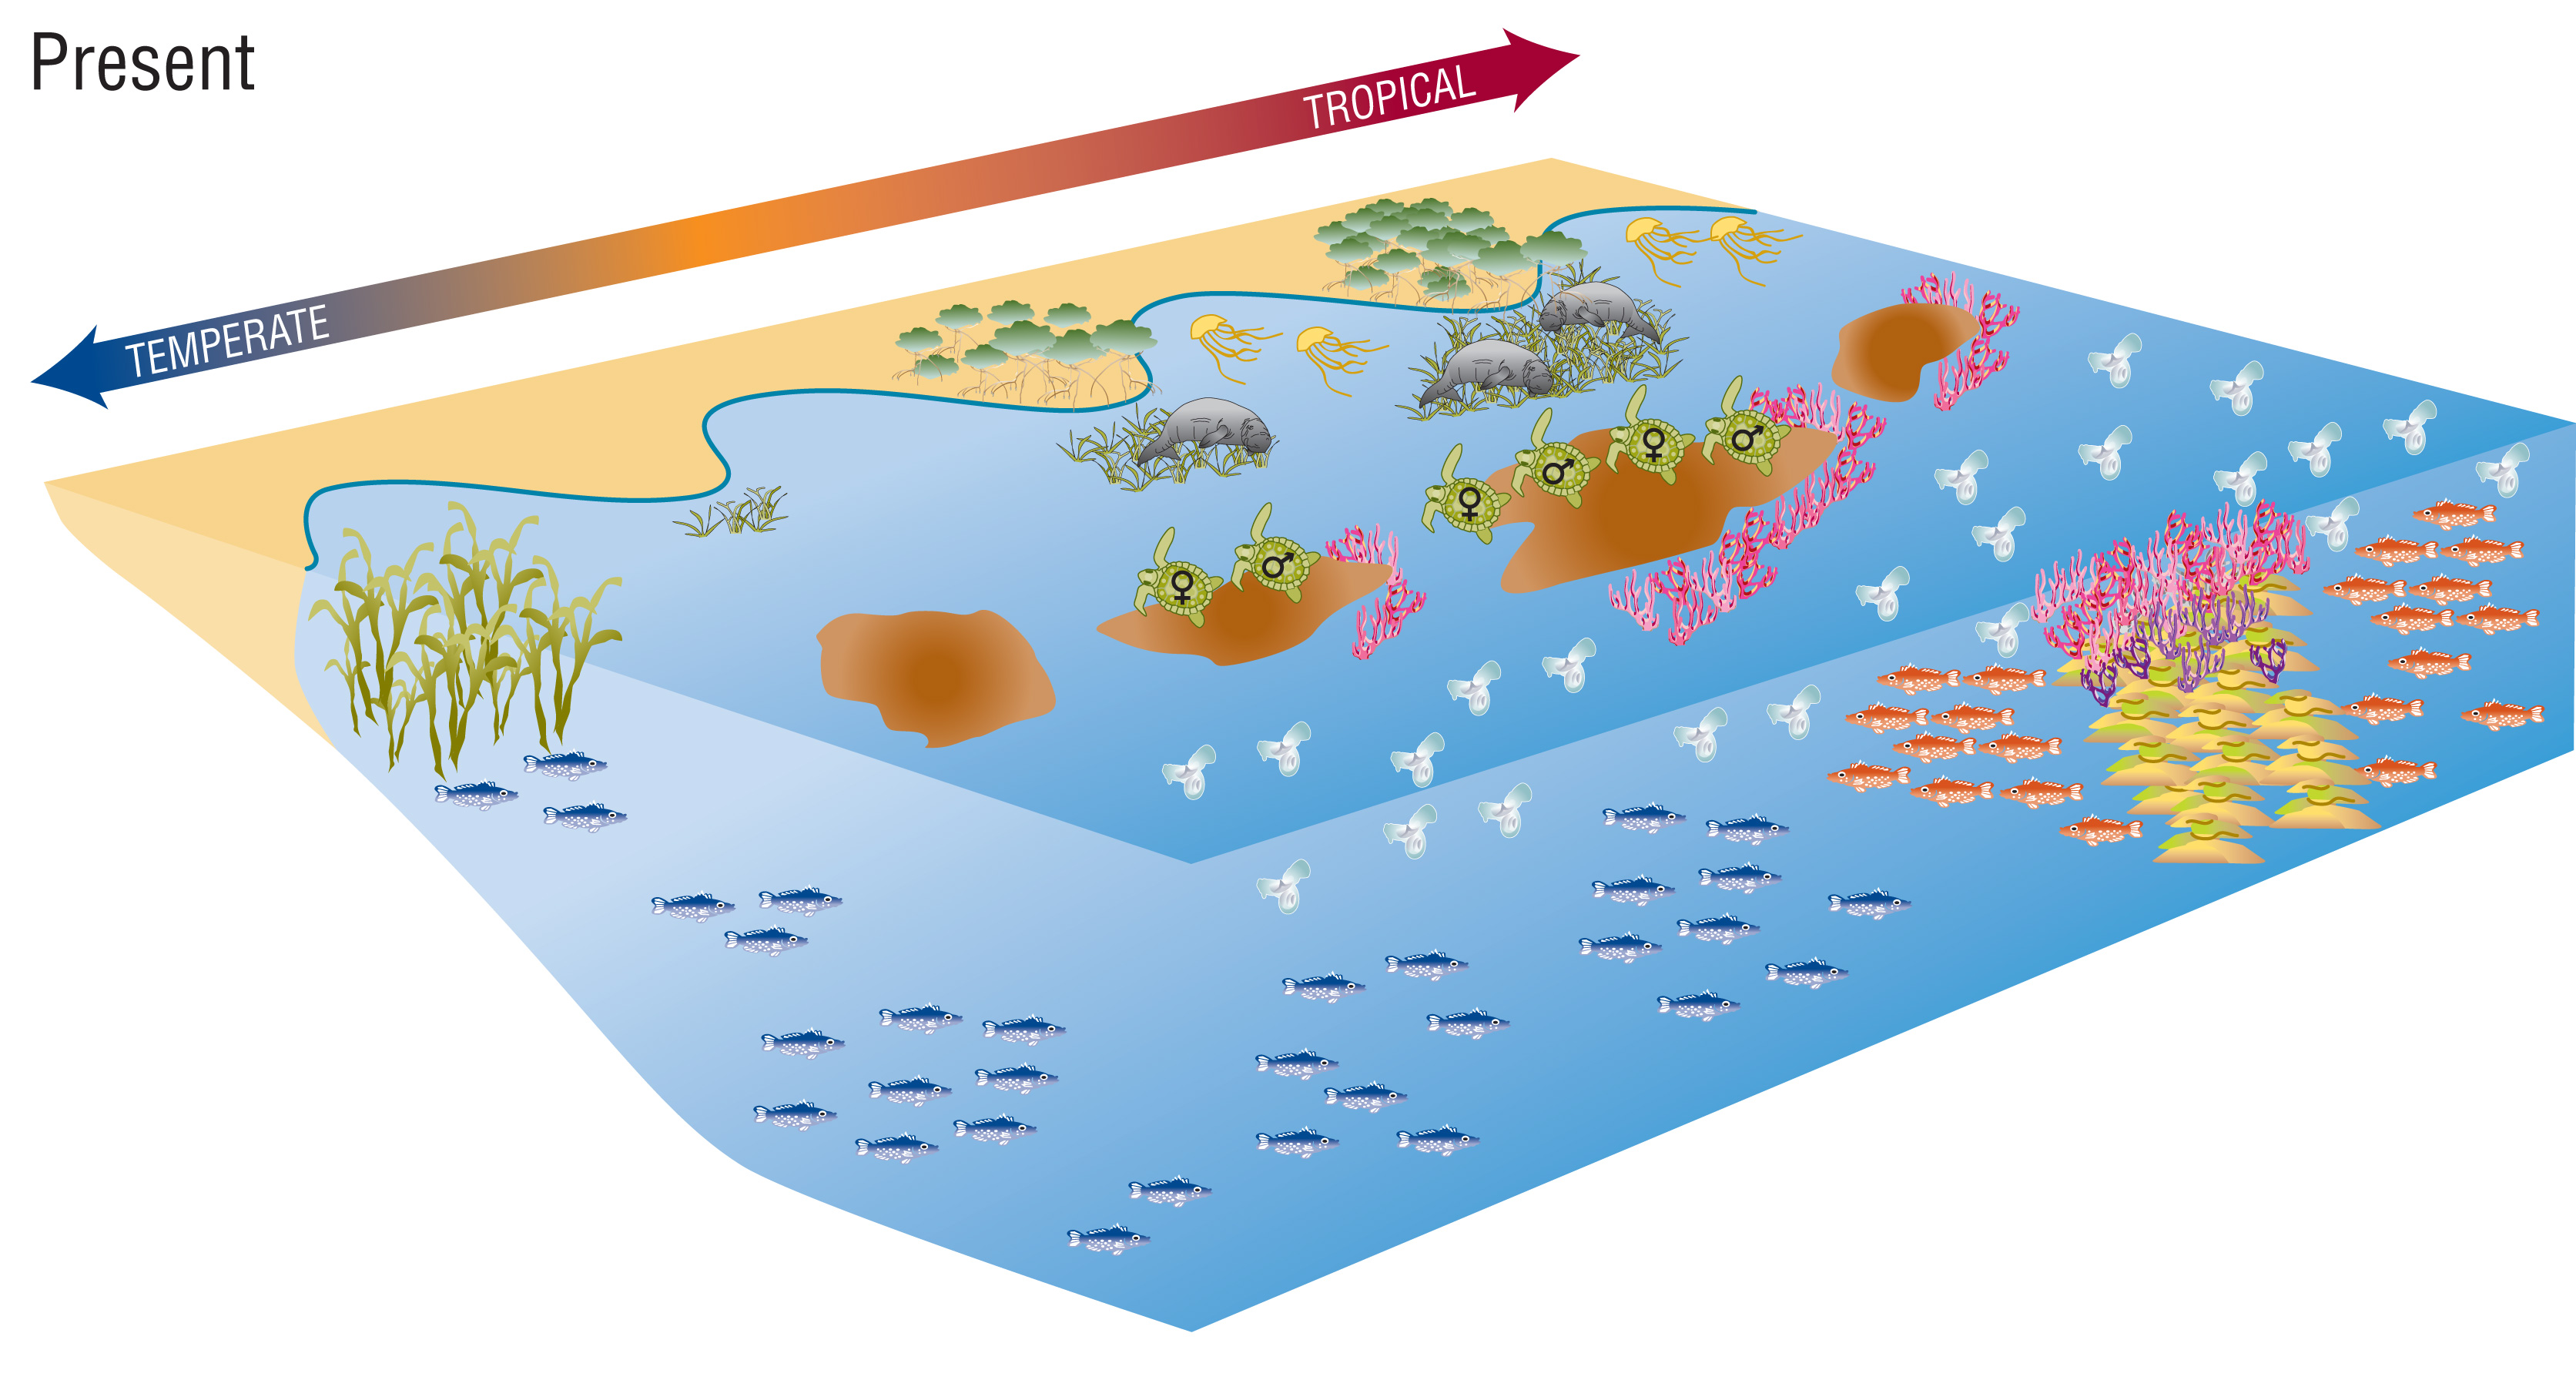 CSIRO - Marine Climate Impacts and Adaptation